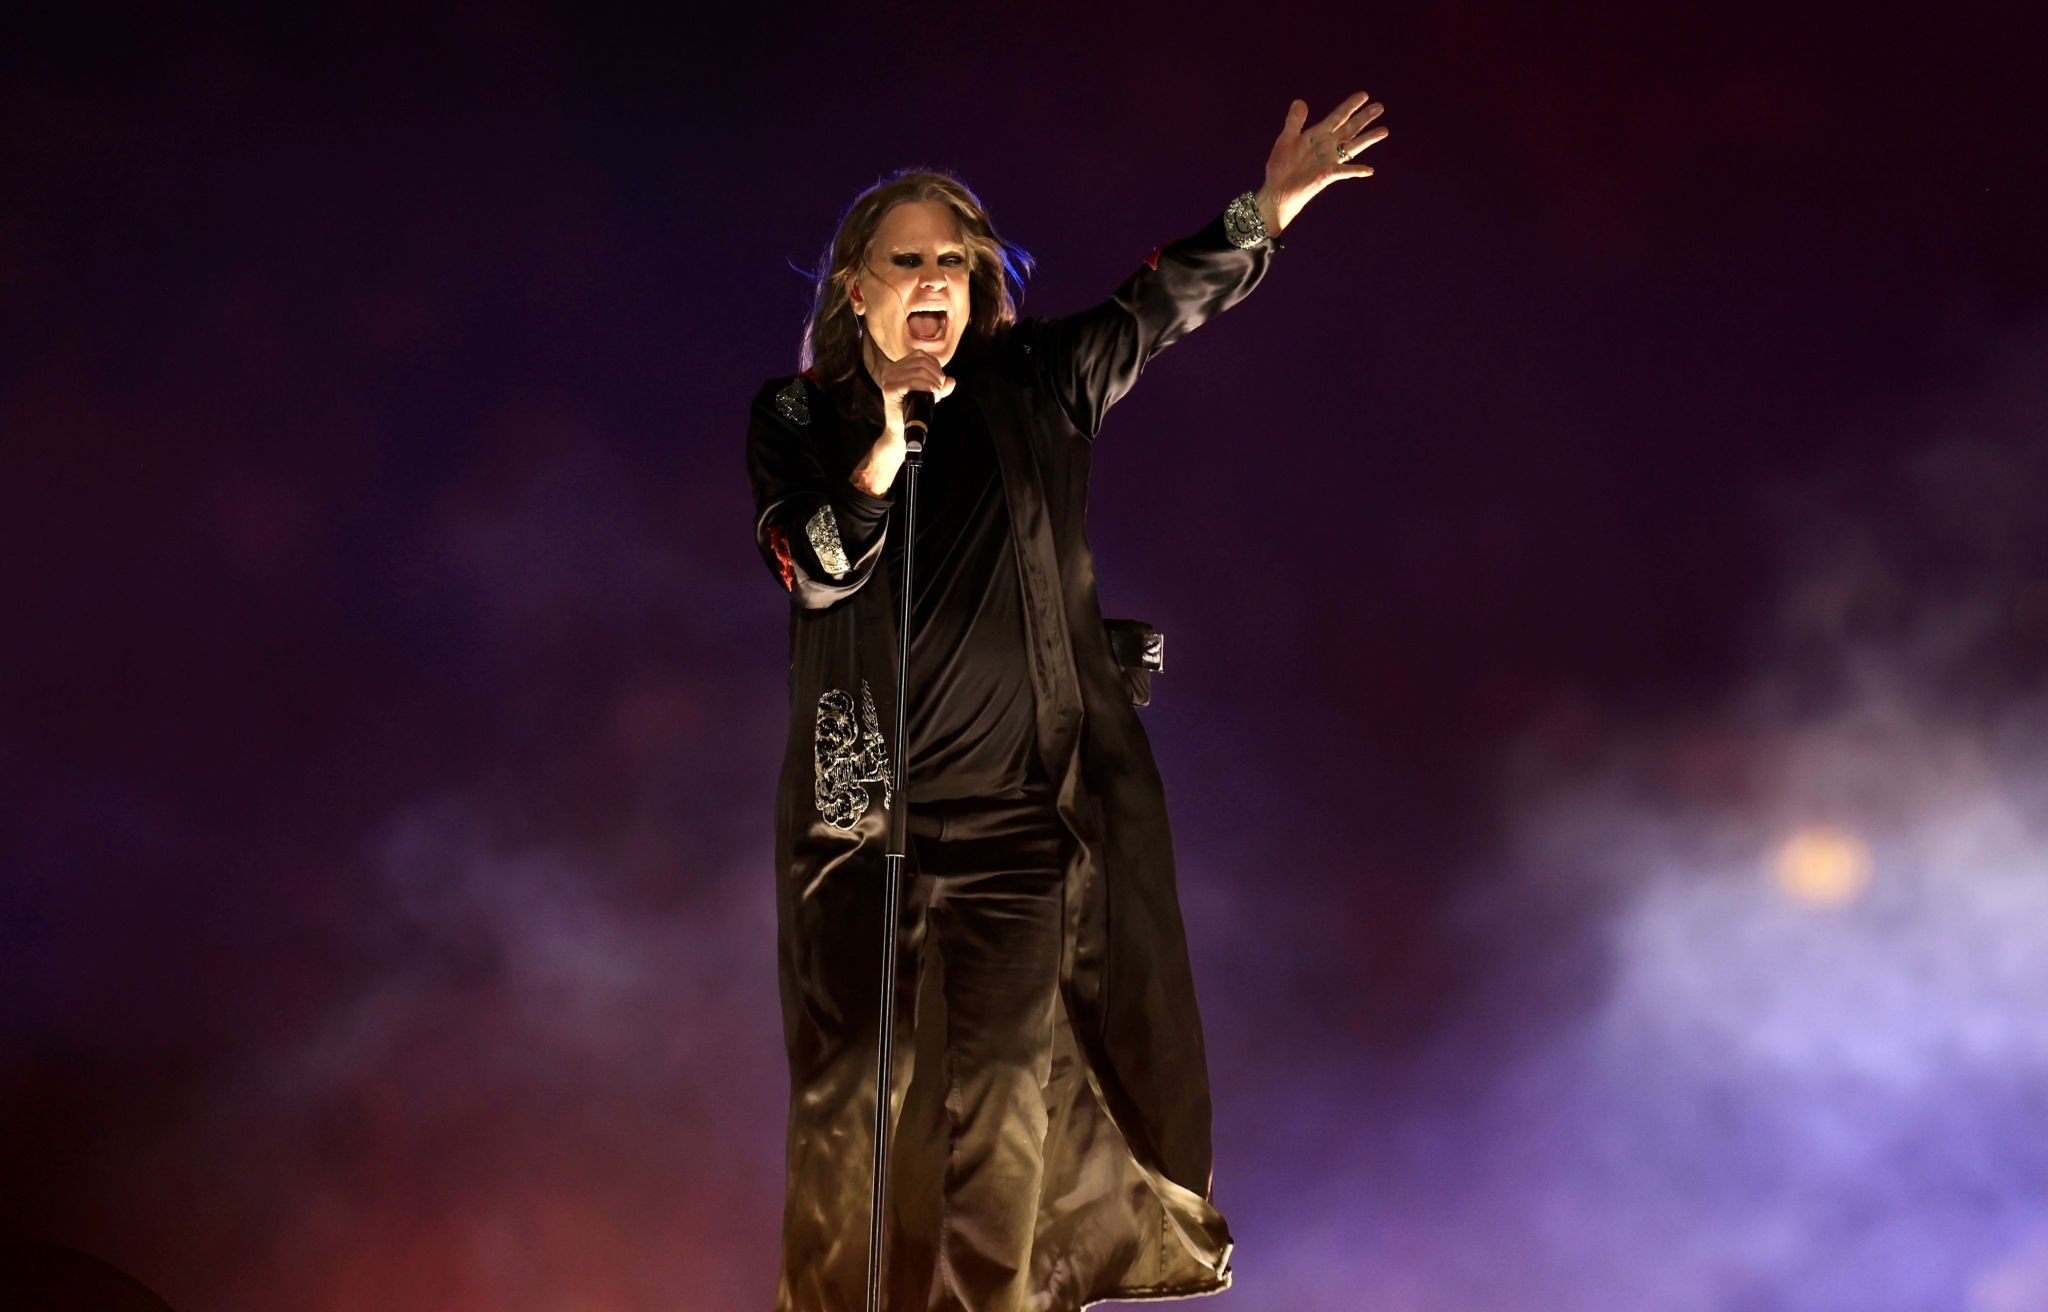 Ozzy Osbourne on the stage